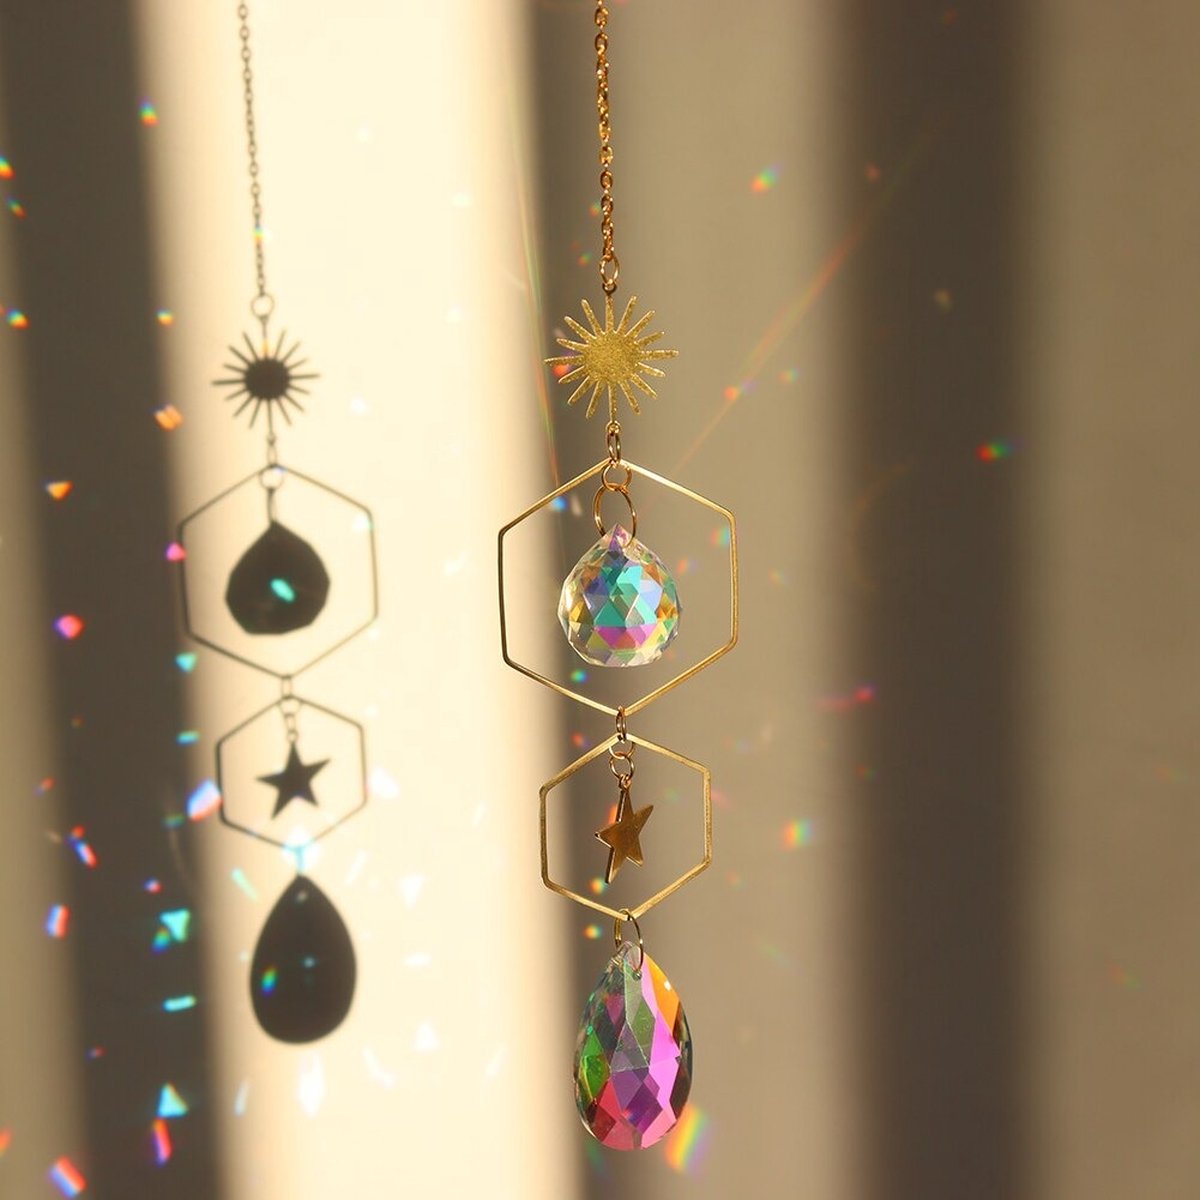 Kristallen zonnevanger - Raamdecoratie lichtprisma - Zon en Ster handgemaakte kristallen zonnevanger